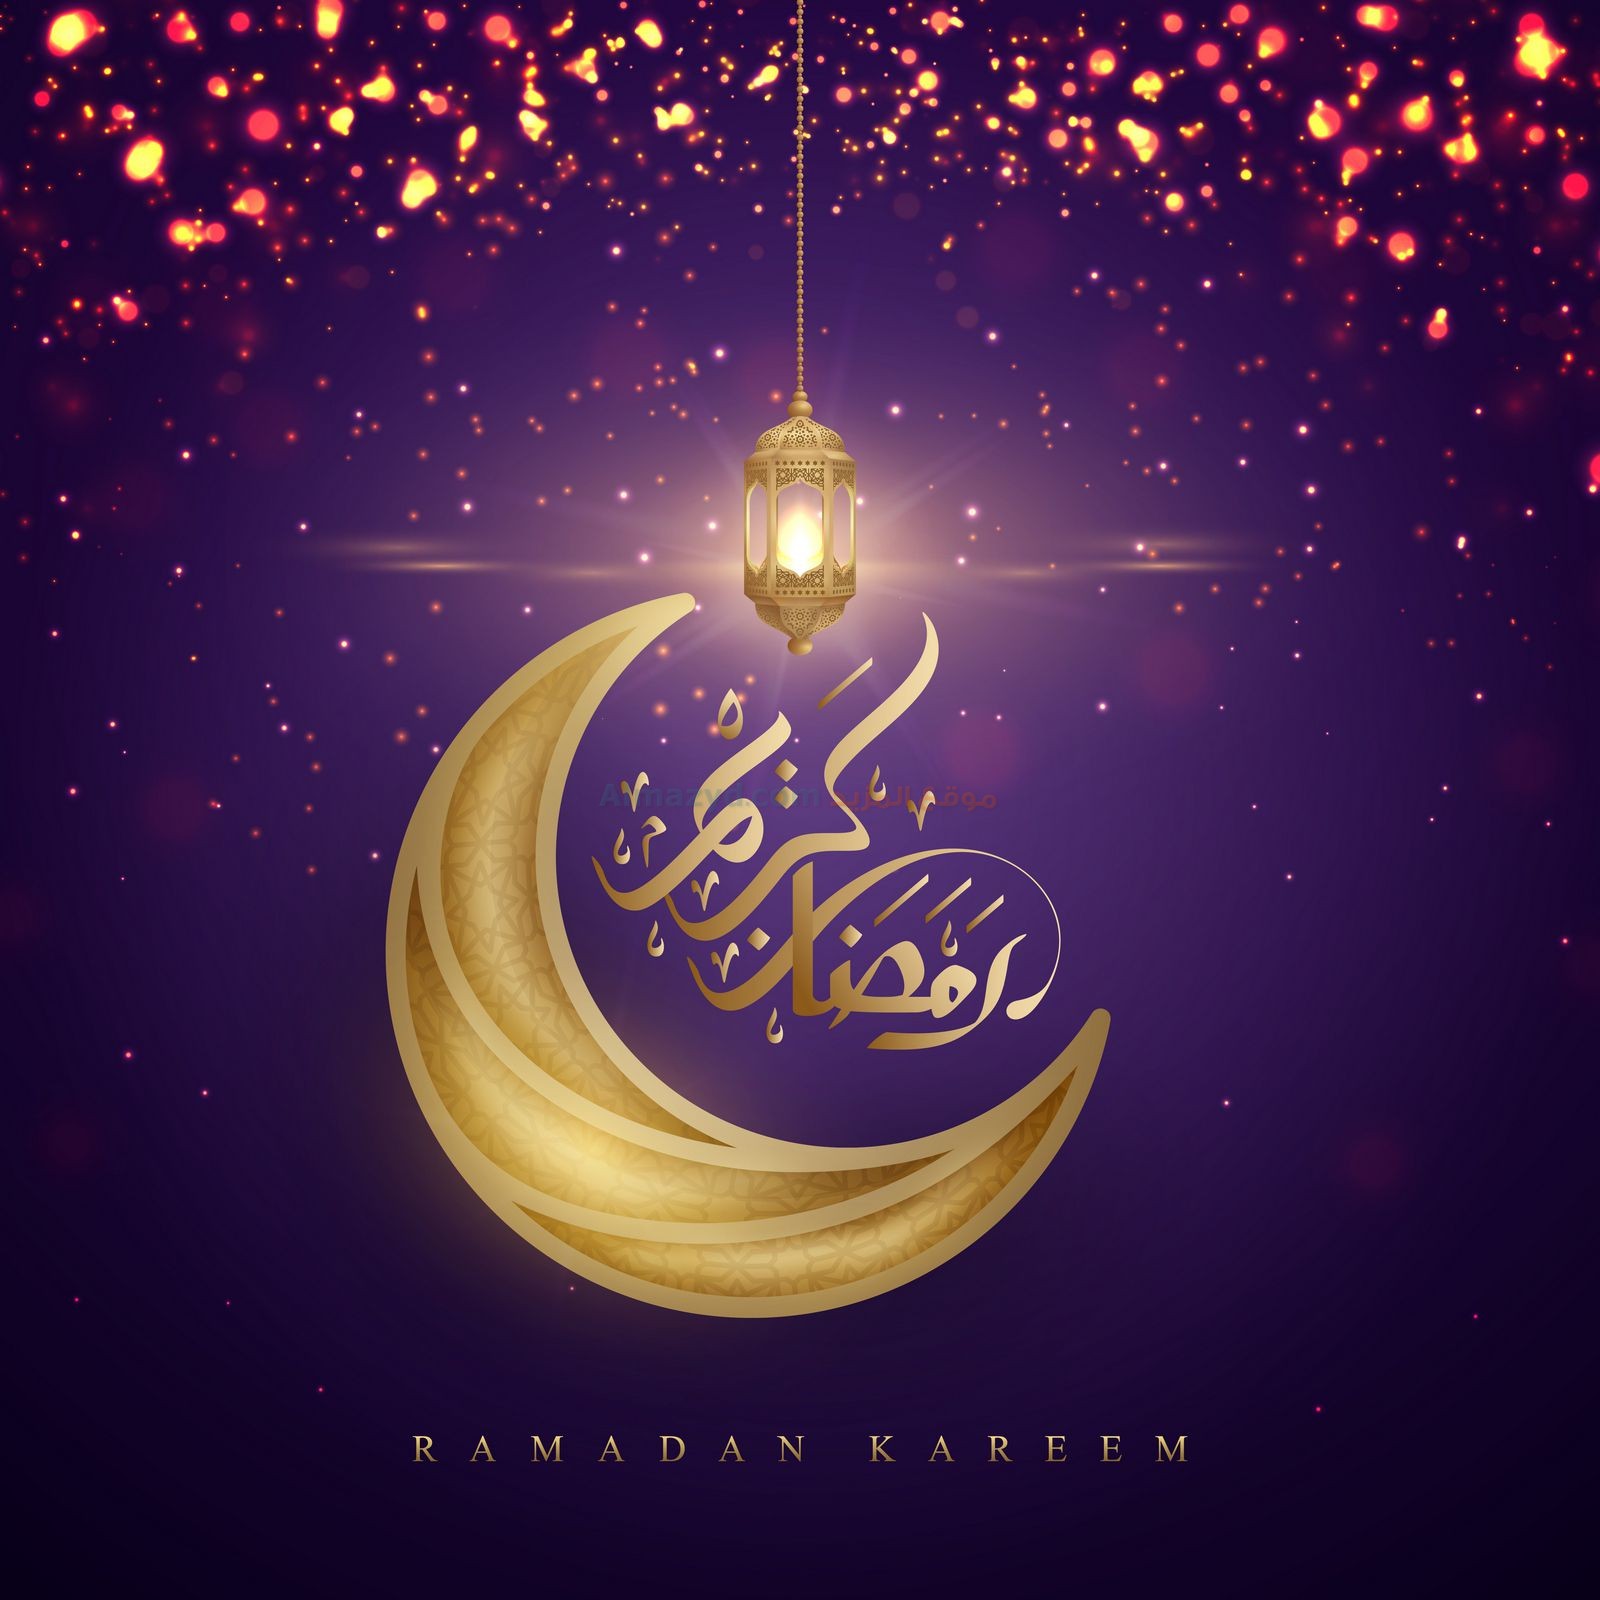 صور رمضان 2020 أجمل صور فوانيس رمضان 2021 بطاقات تهنئة لرمضان تهنئة رمضان بالأسماء 23